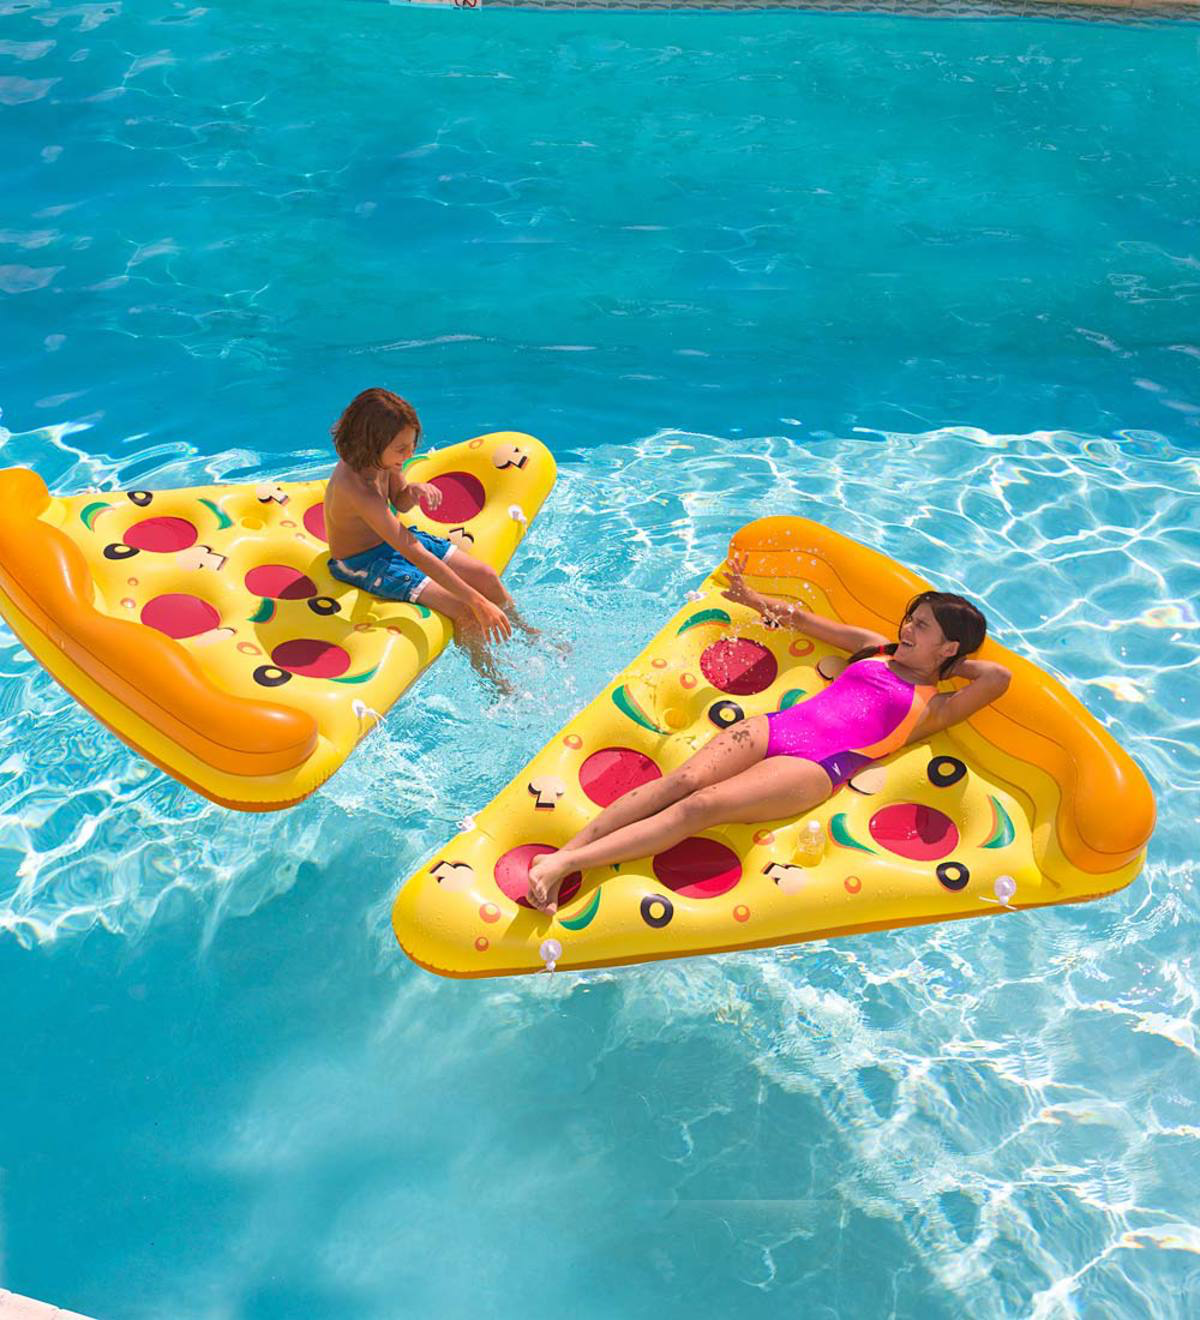 Floatin’ Pizza Slices